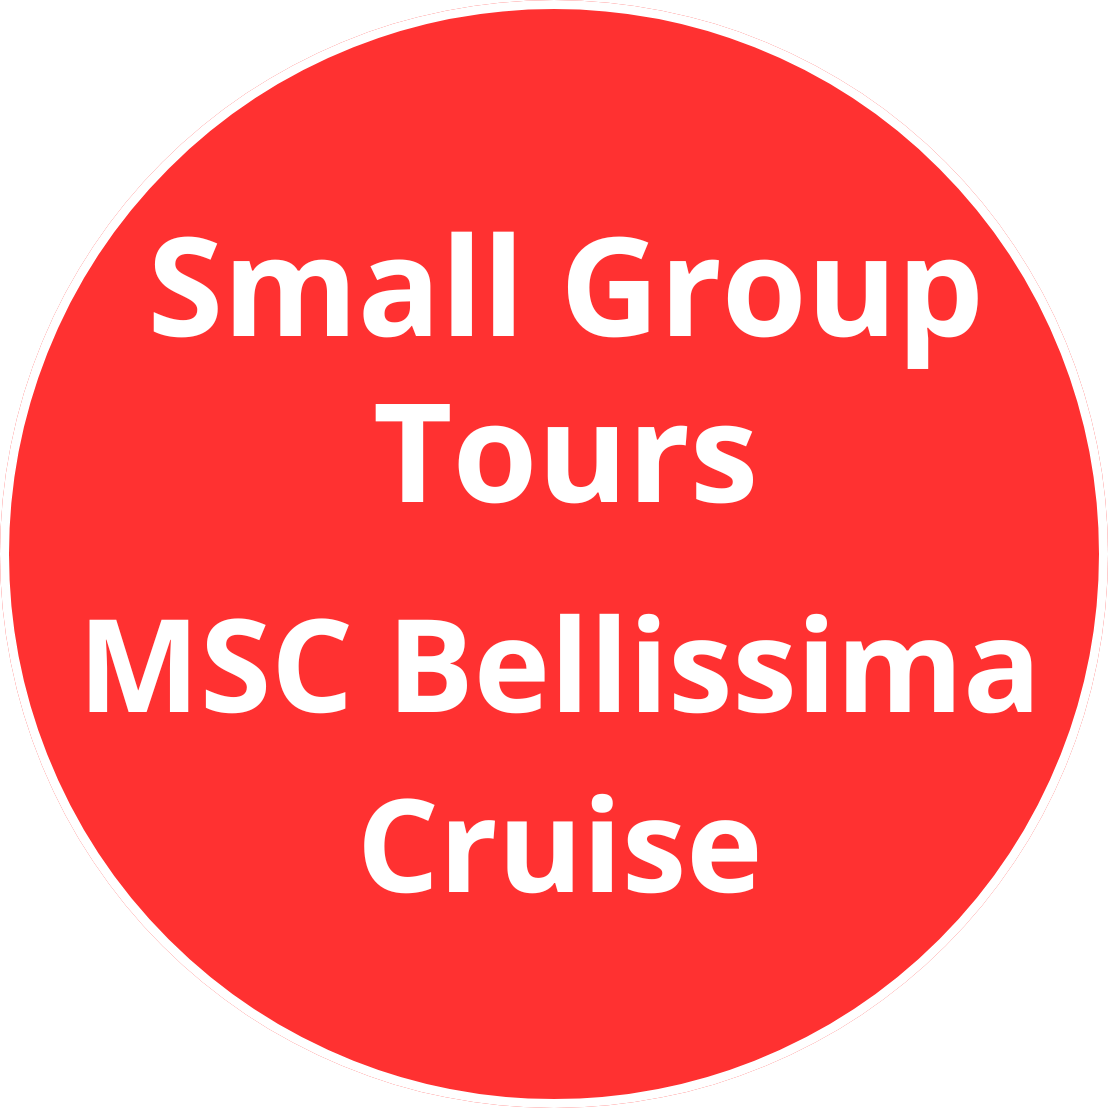 Shore Excursions Asia - MSC Bellissima Cruise